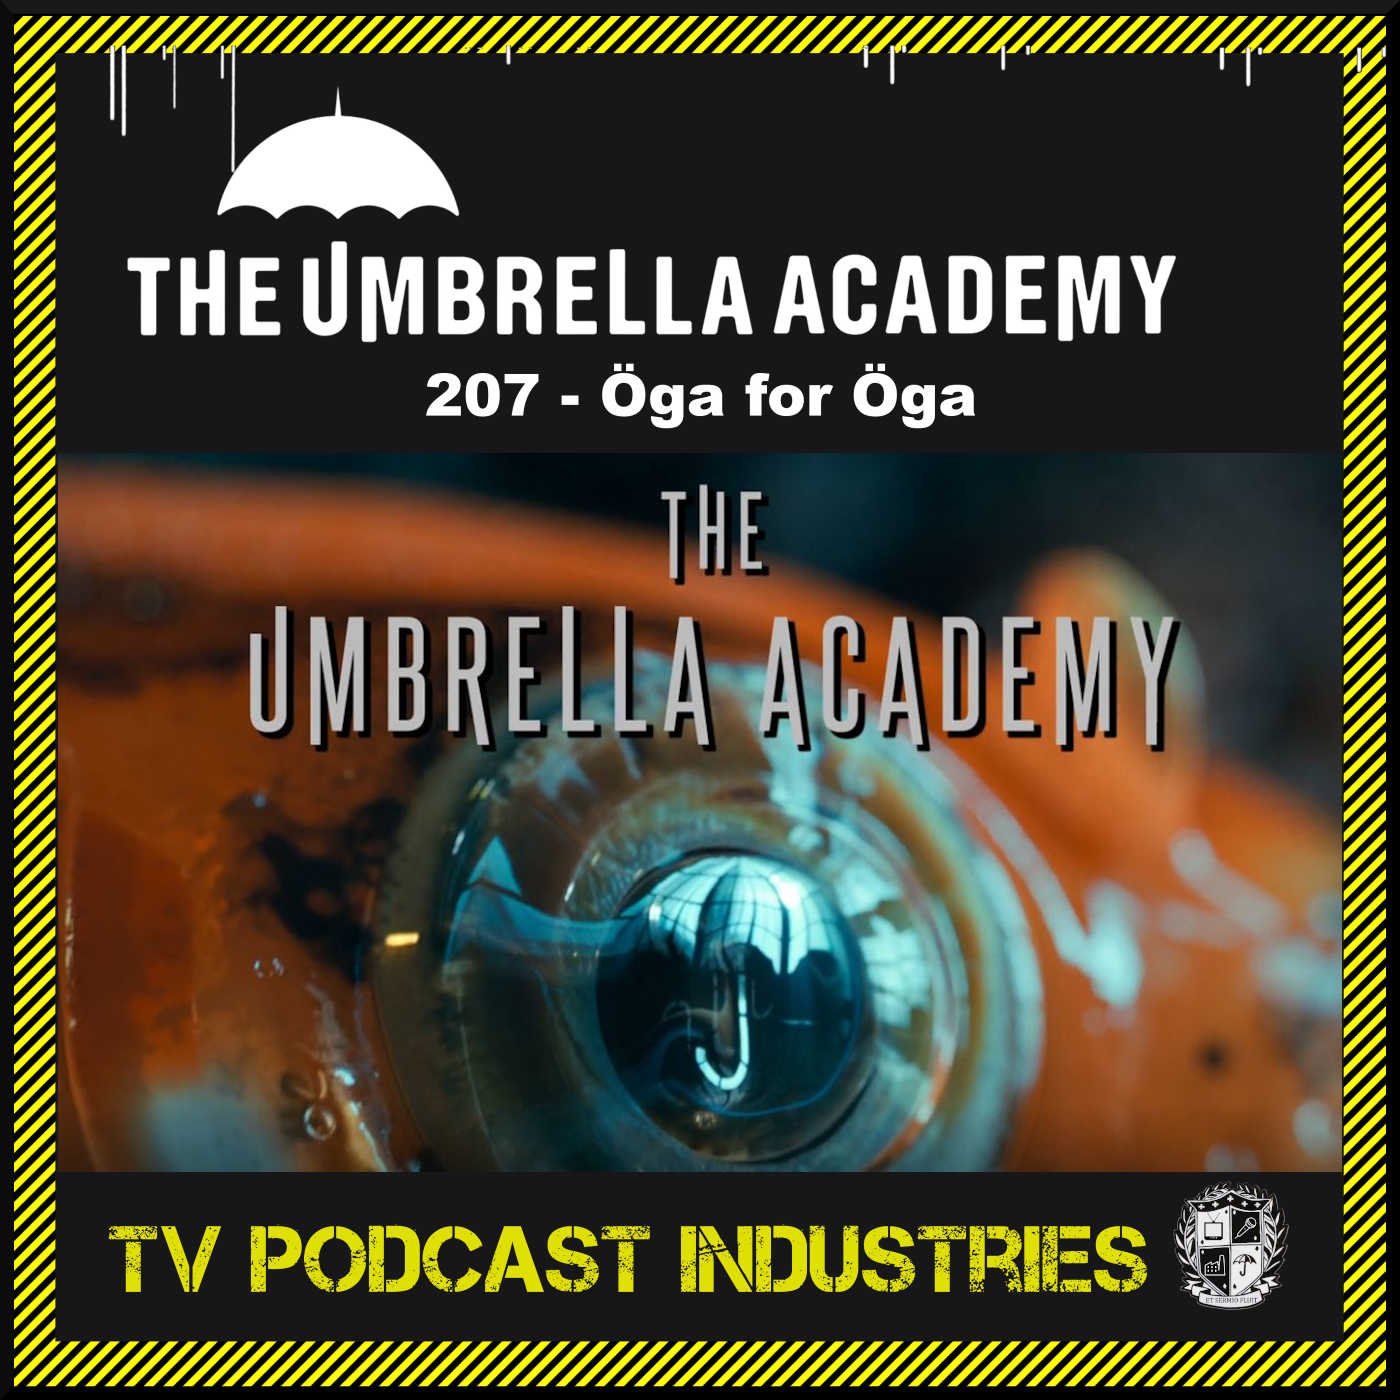 Umbrella Academy 207 Podcast "Oga for Oga"